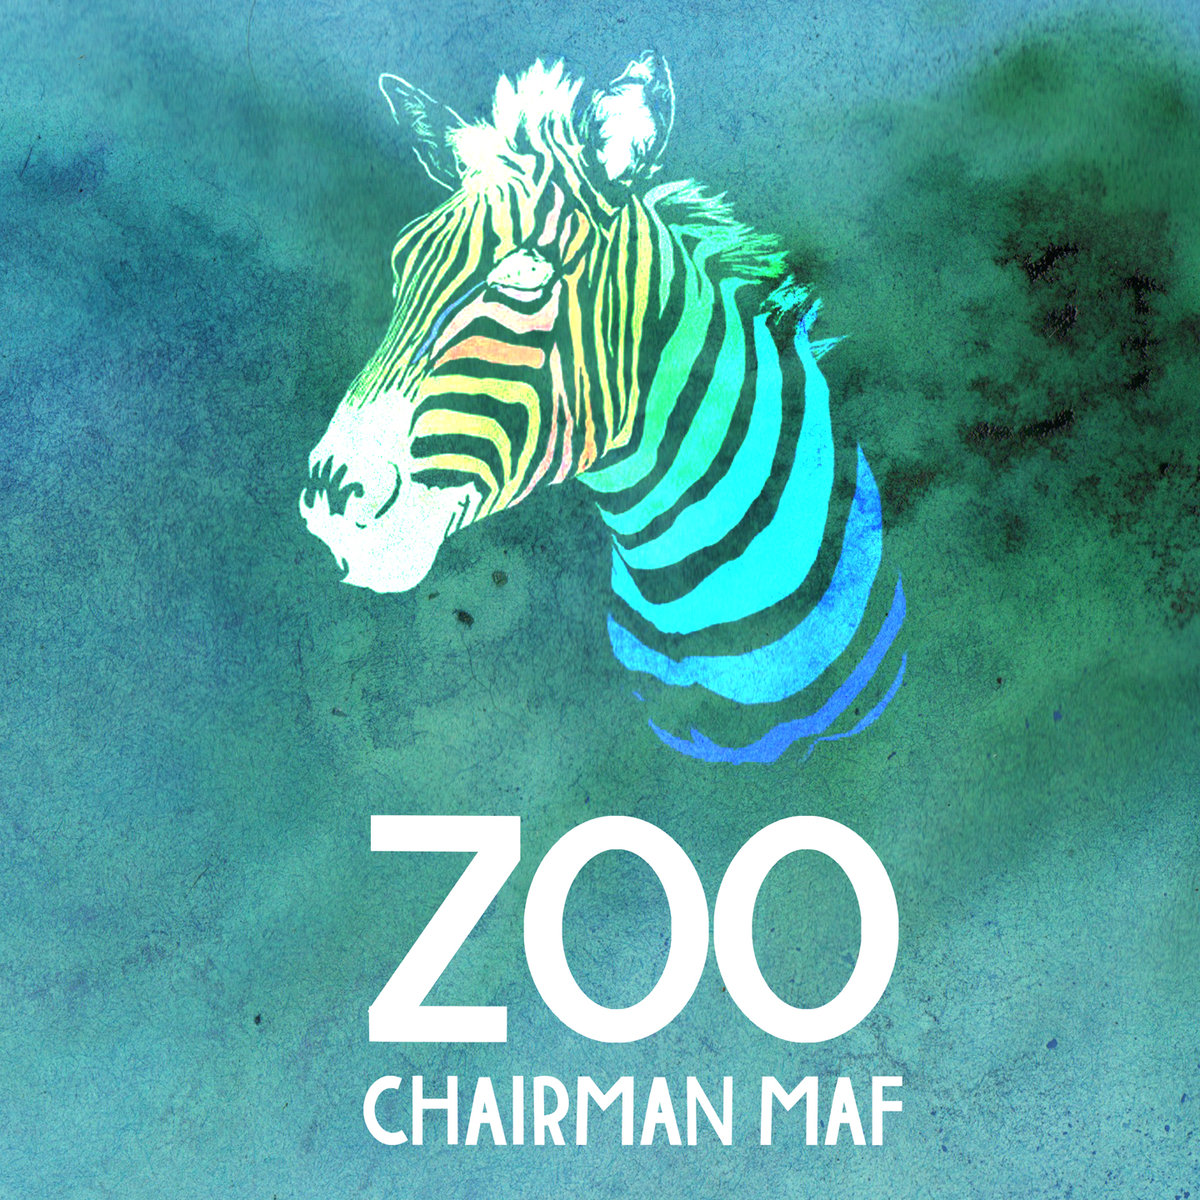 Stream_chairman_maf_presenta_zoo